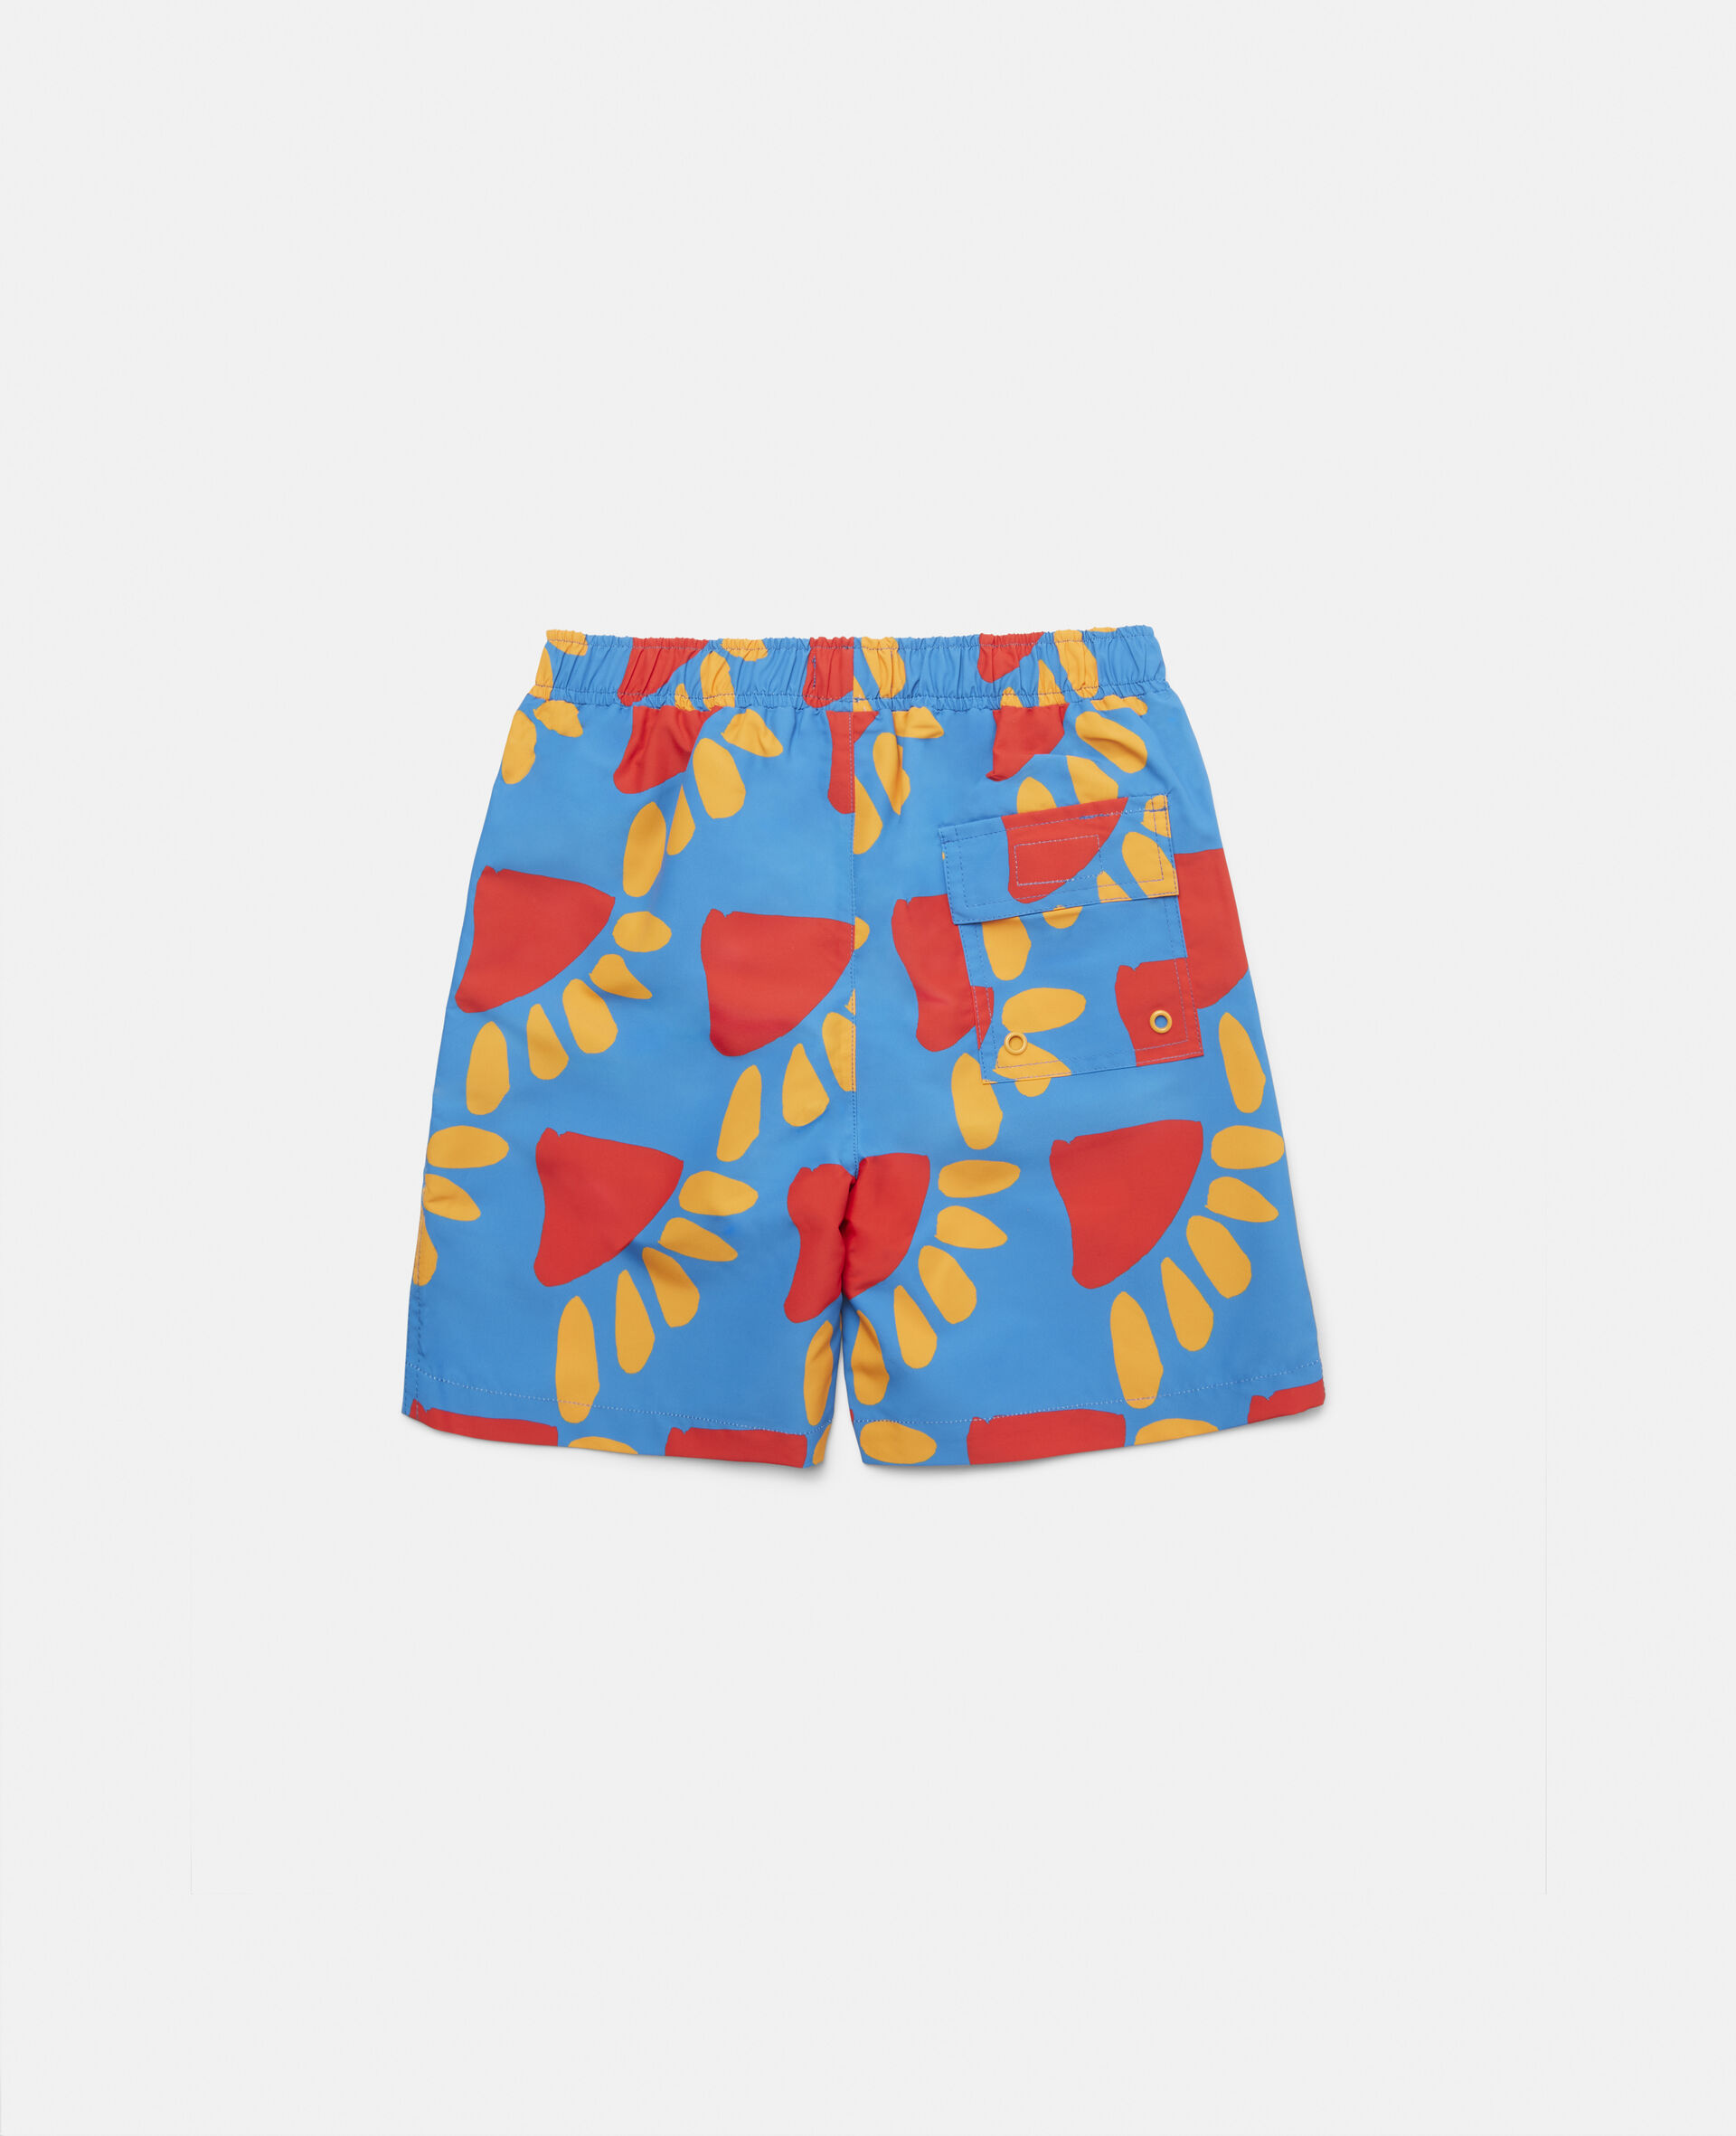 Graphic Sun Print Swim Shorts-Multicoloured-large image number 2